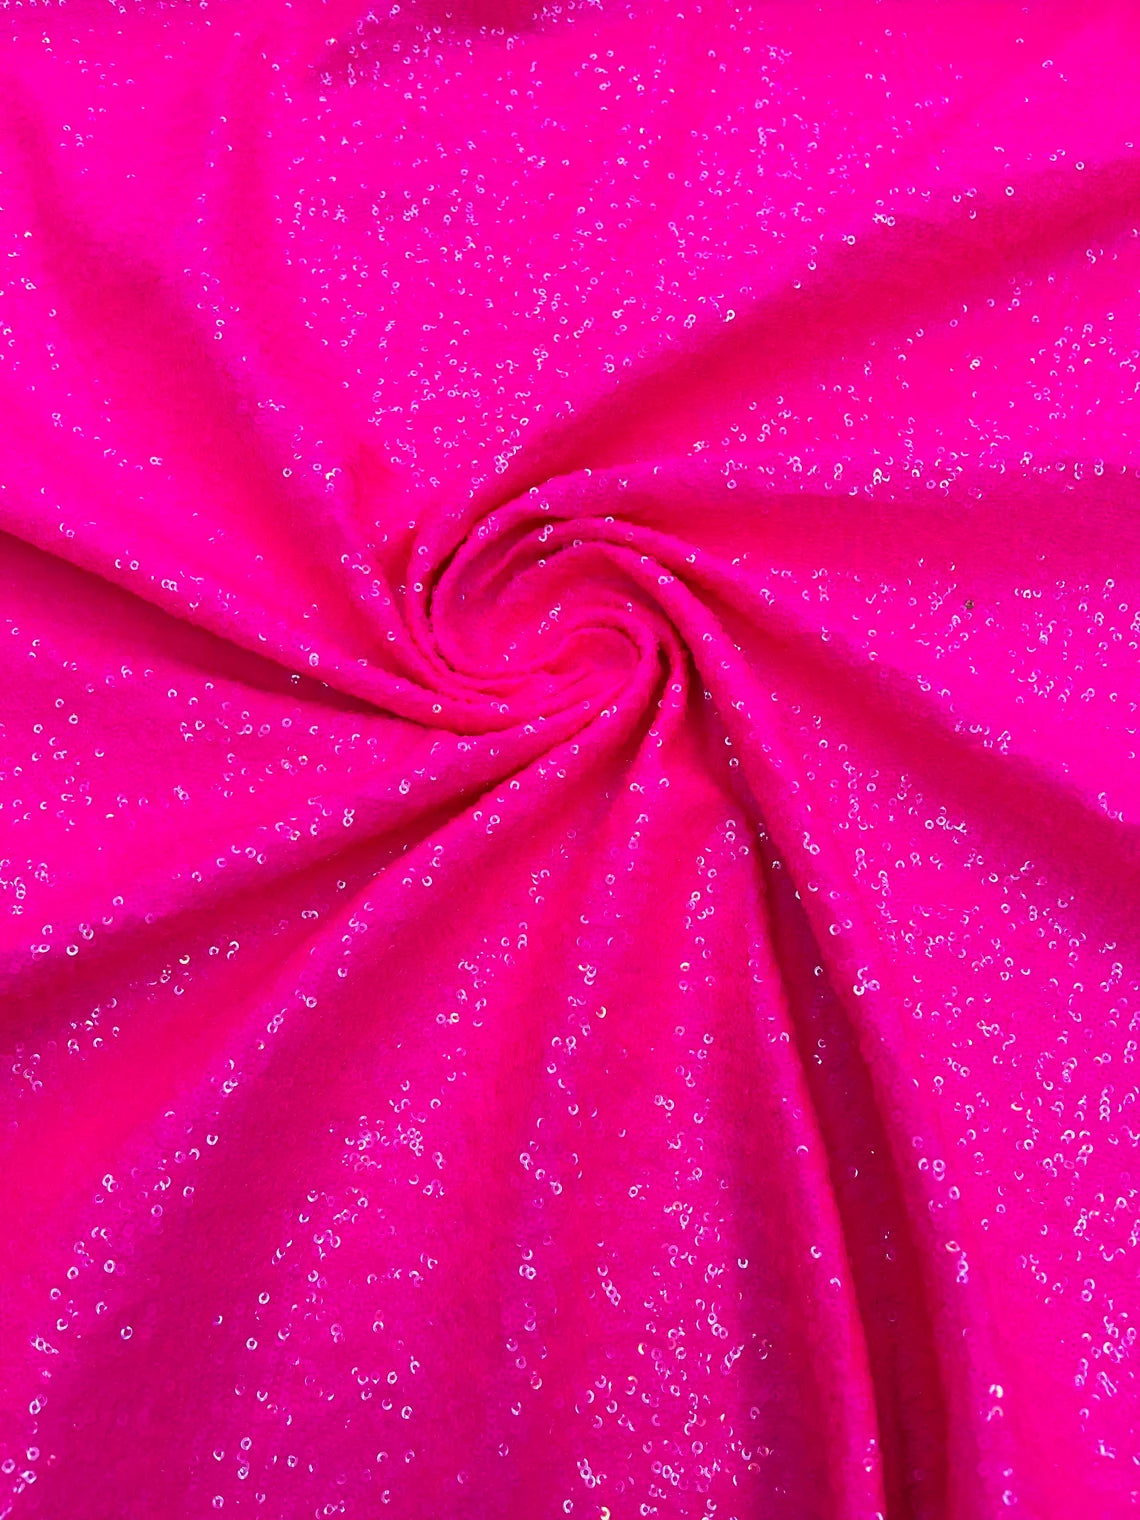 Mini Glitz Sequins on Milliskin - Neon Pink - 4 Way Stretch Milliskin Stretch Spandex Fabric by Yard